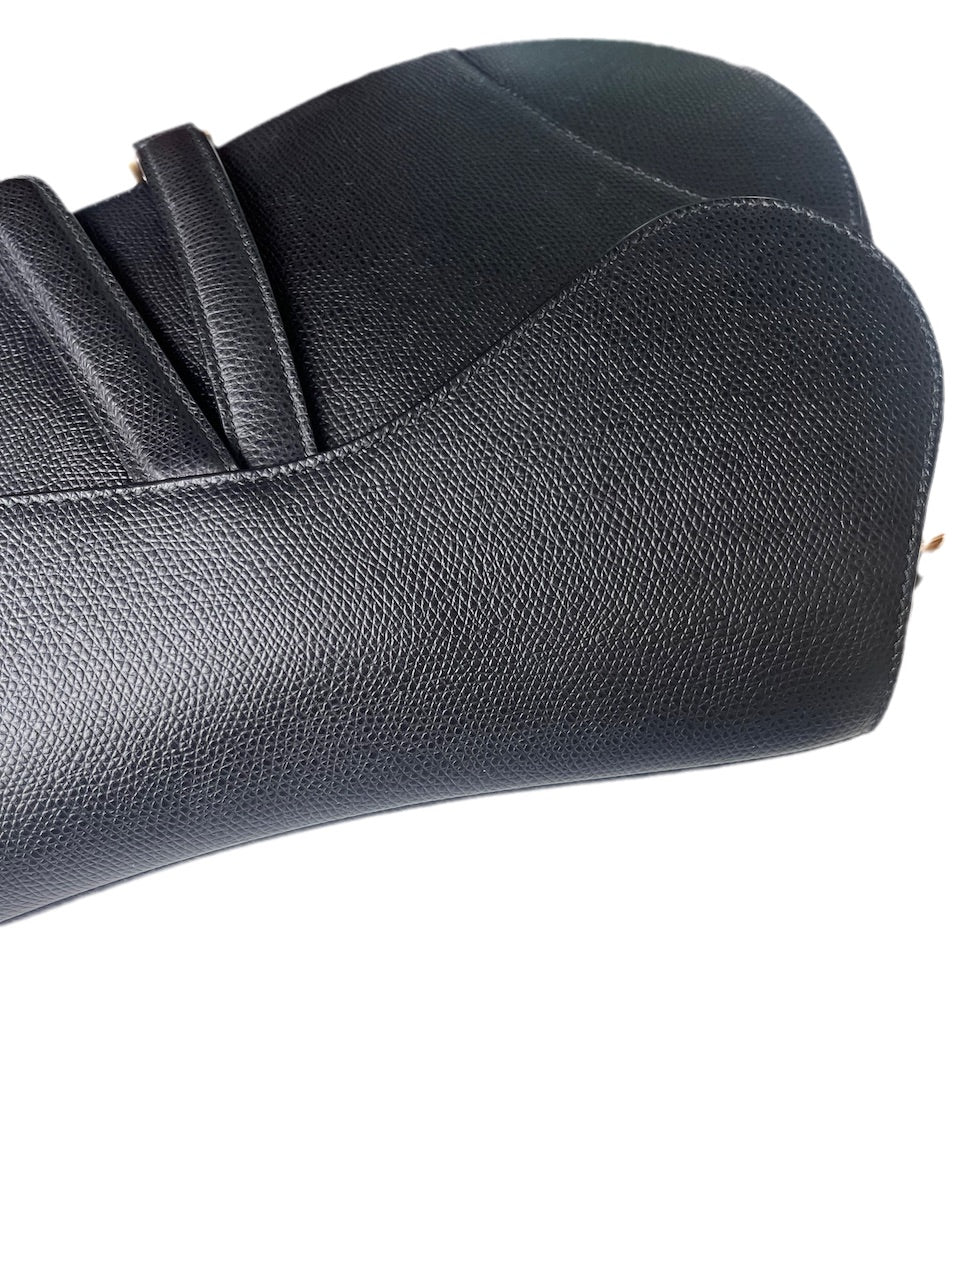 Sold Dior Saddle Black Medium Grained Leather Handbag with Gold Hardware